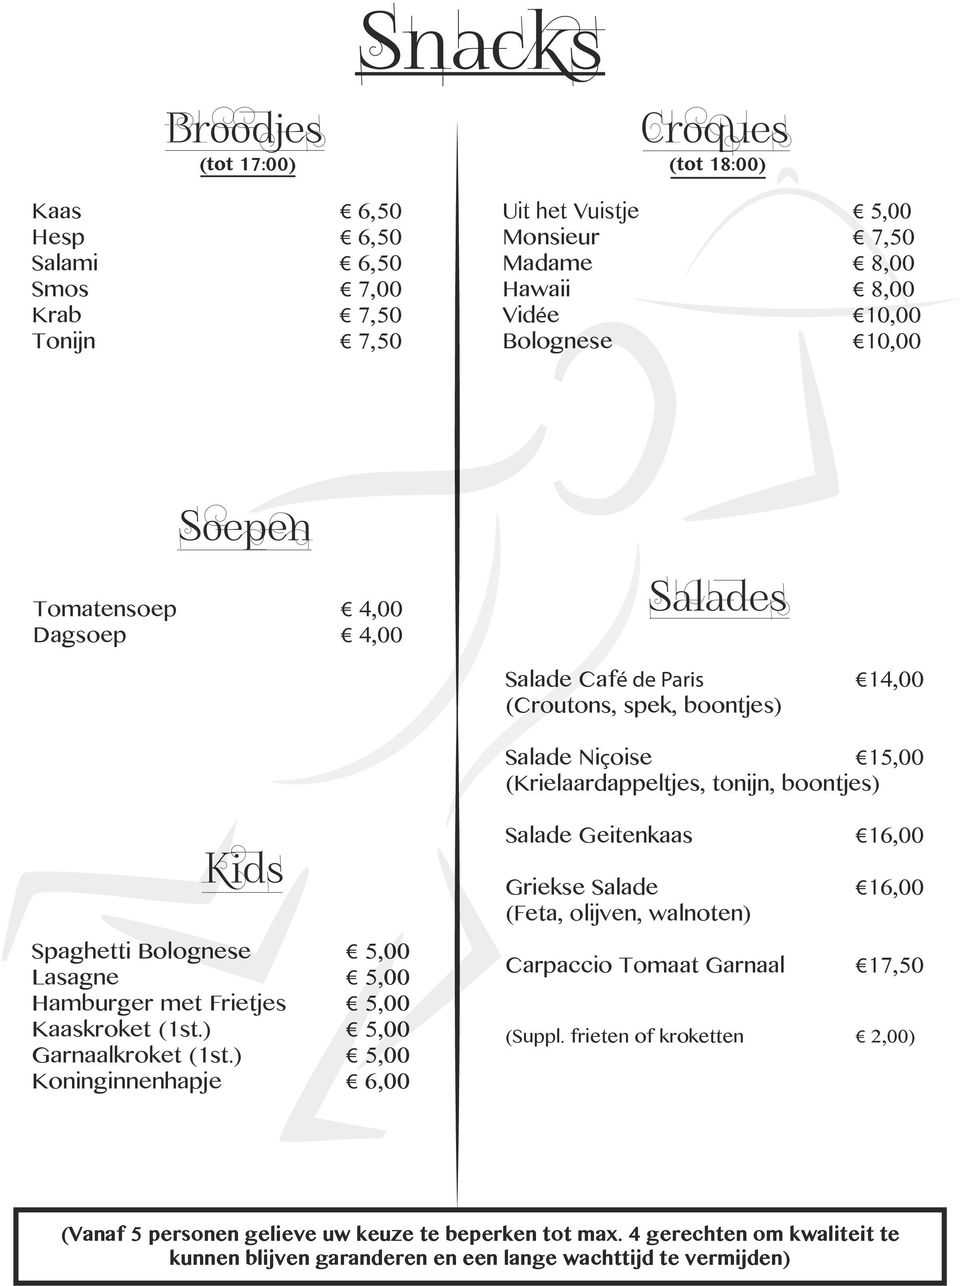 Lasagne 5,00 Hamburger met Frietjes 5,00 Kaaskroket (1st.) 5,00 Garnaalkroket (1st.